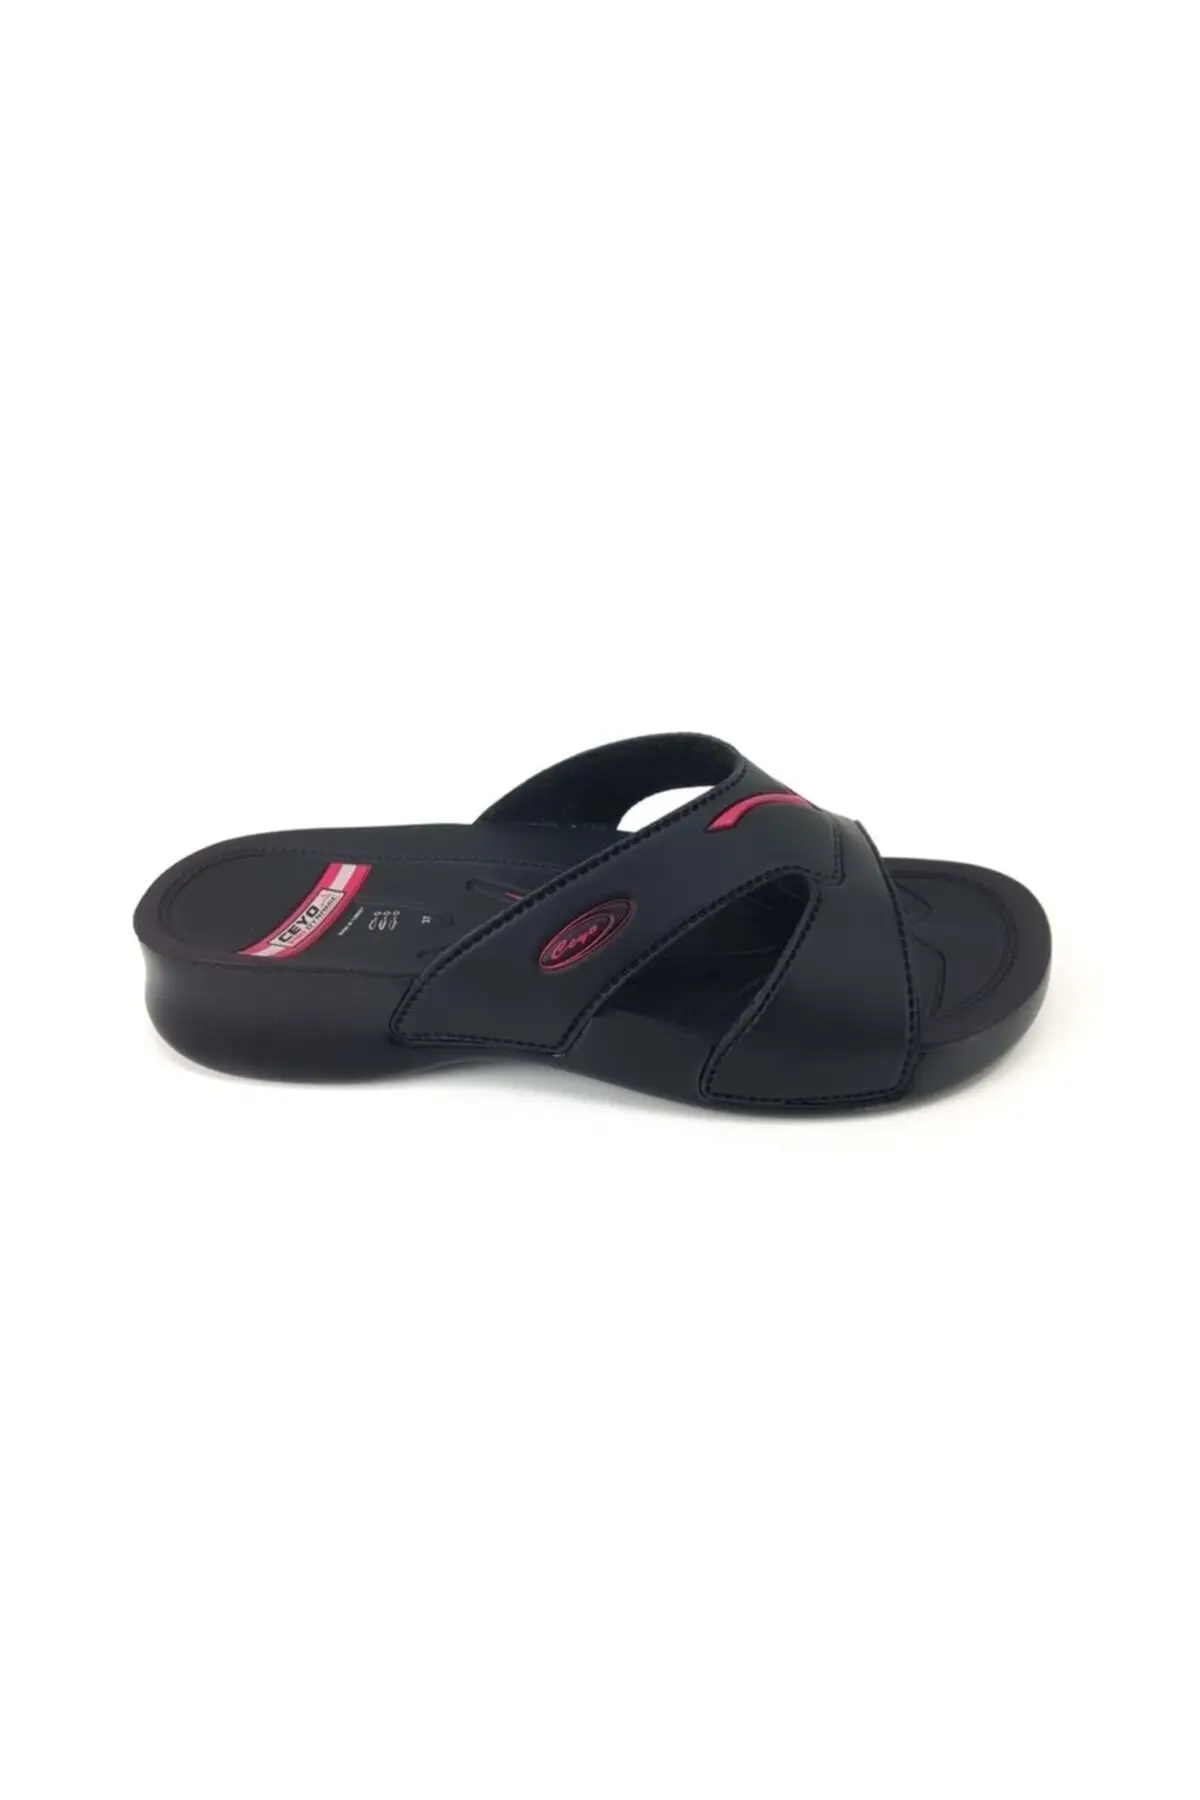 

Women Sandals - anatomical female black Summer Indoor Outdoor Flip Flops Beach Shoe Female Slippers Platform Casual